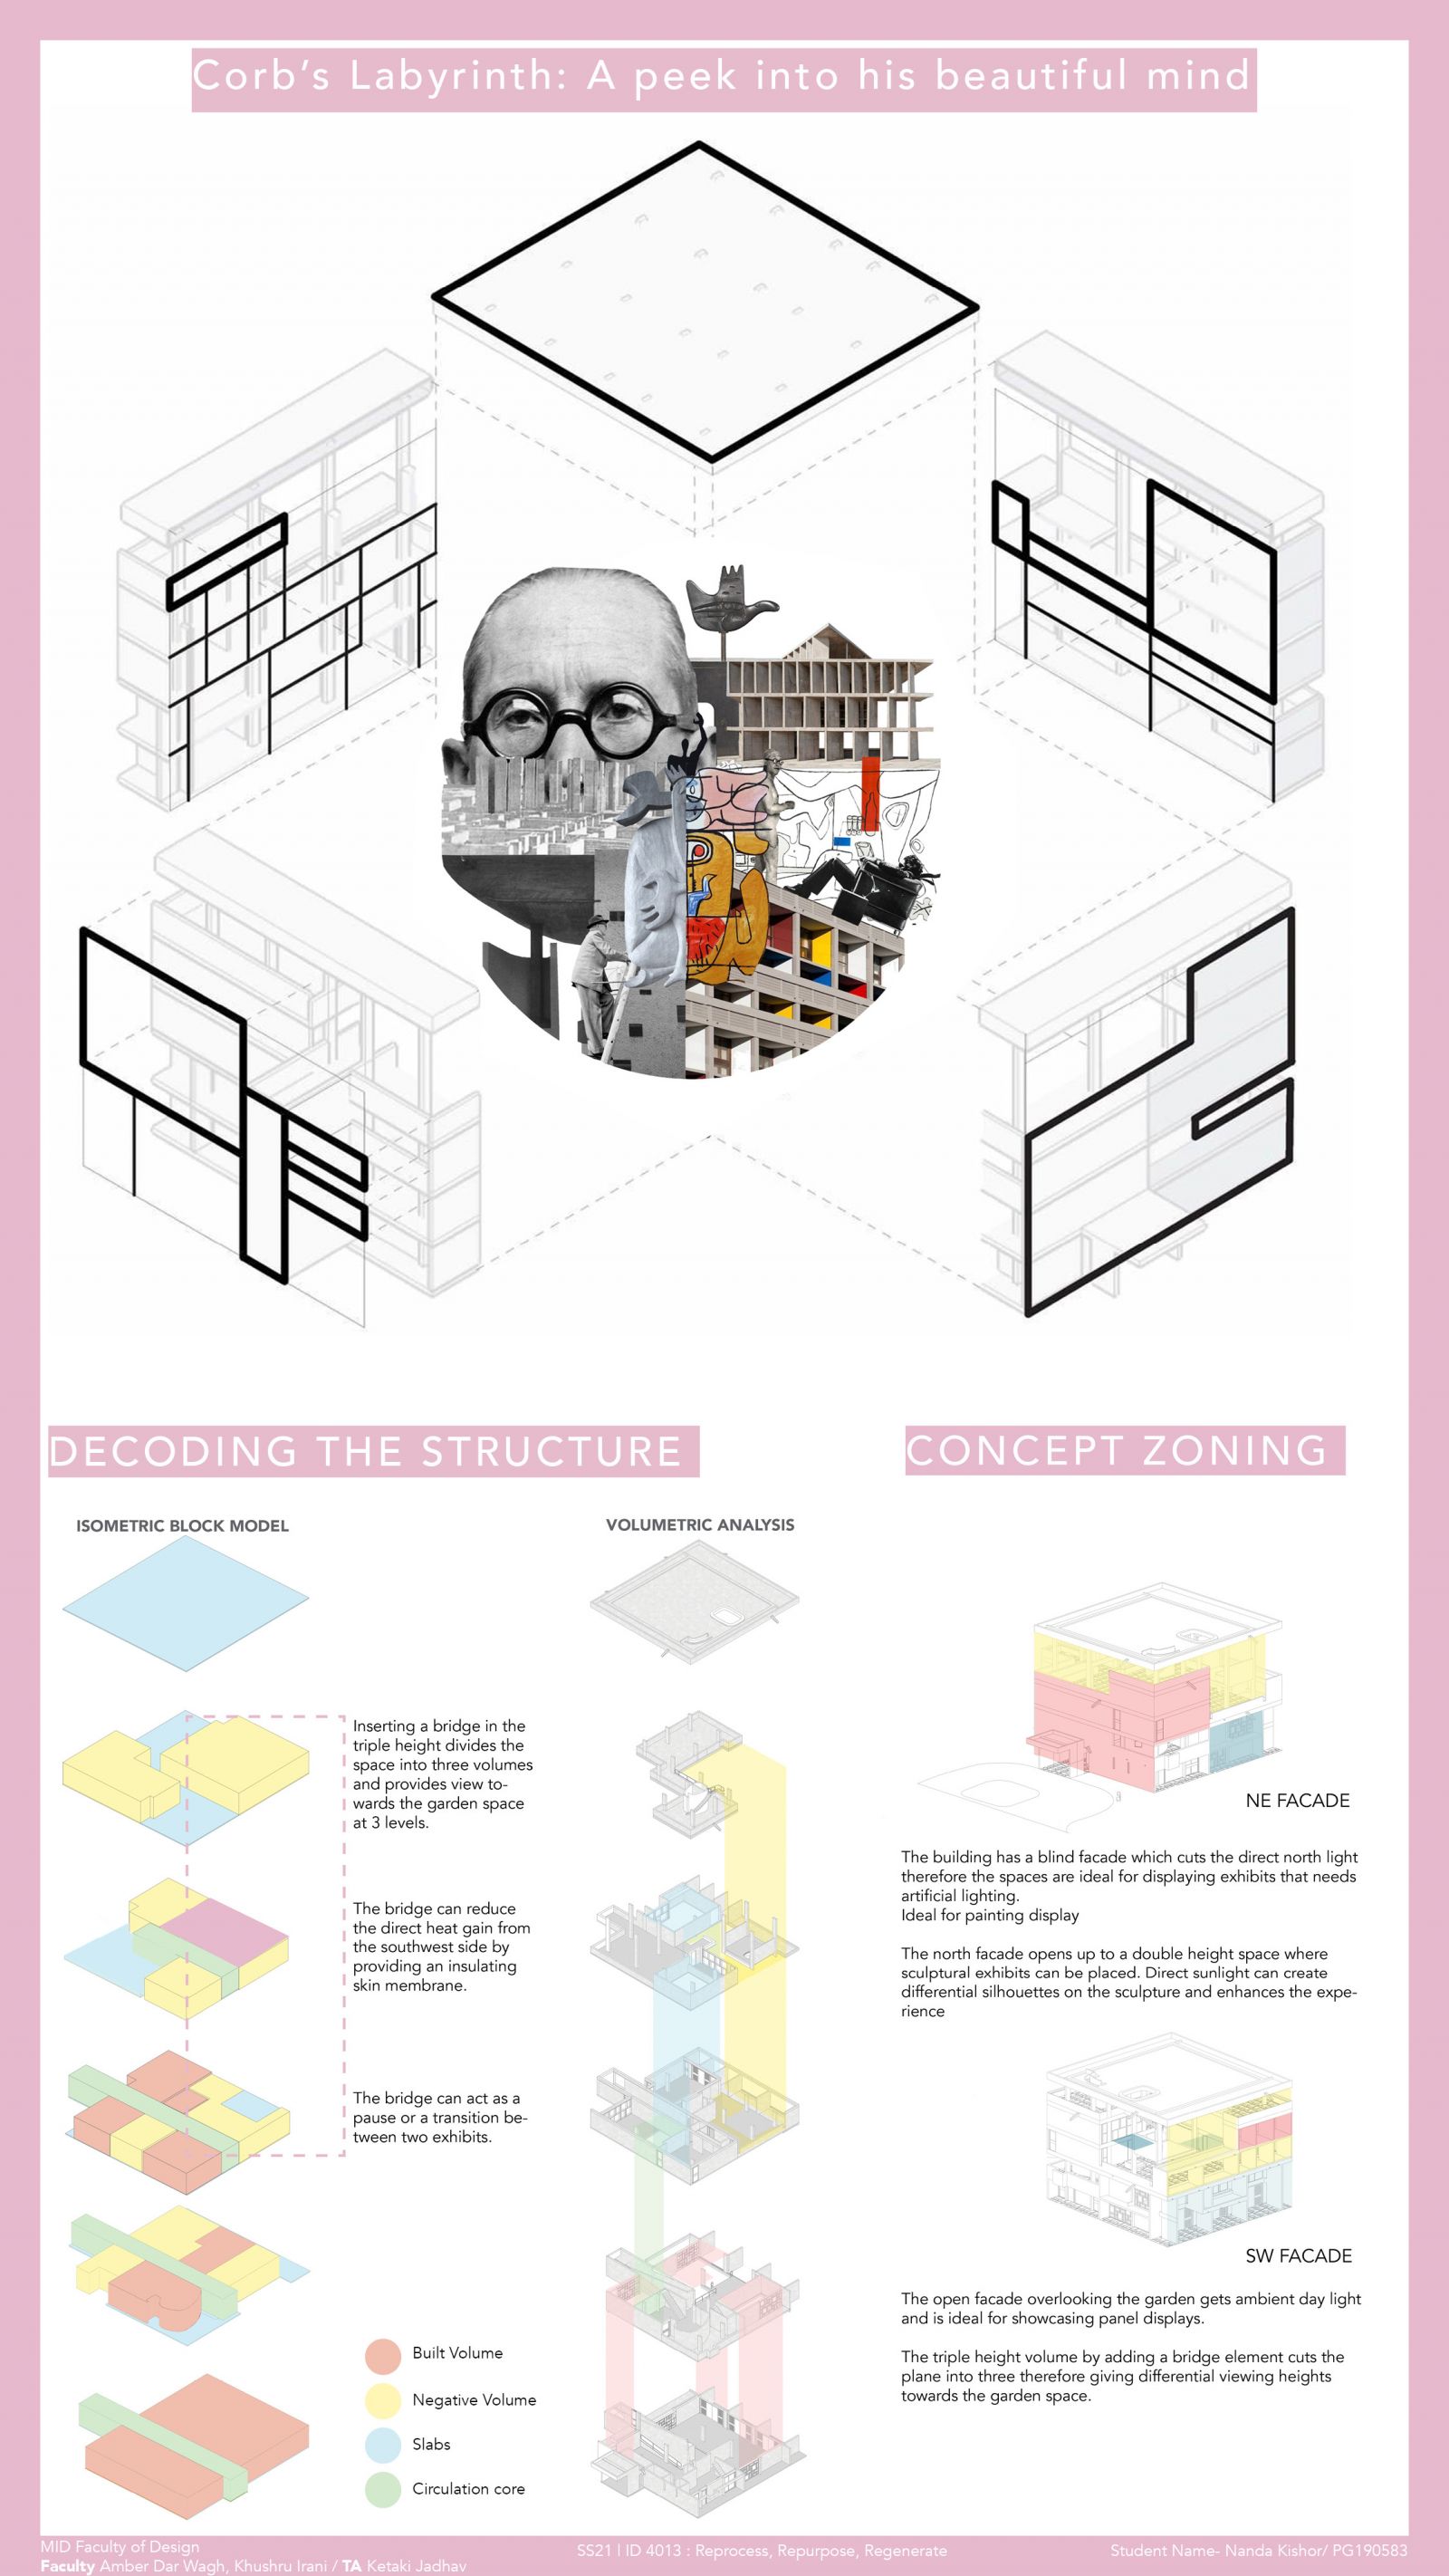 Corbusier's Imaginarium: A peek into his beautiful mind